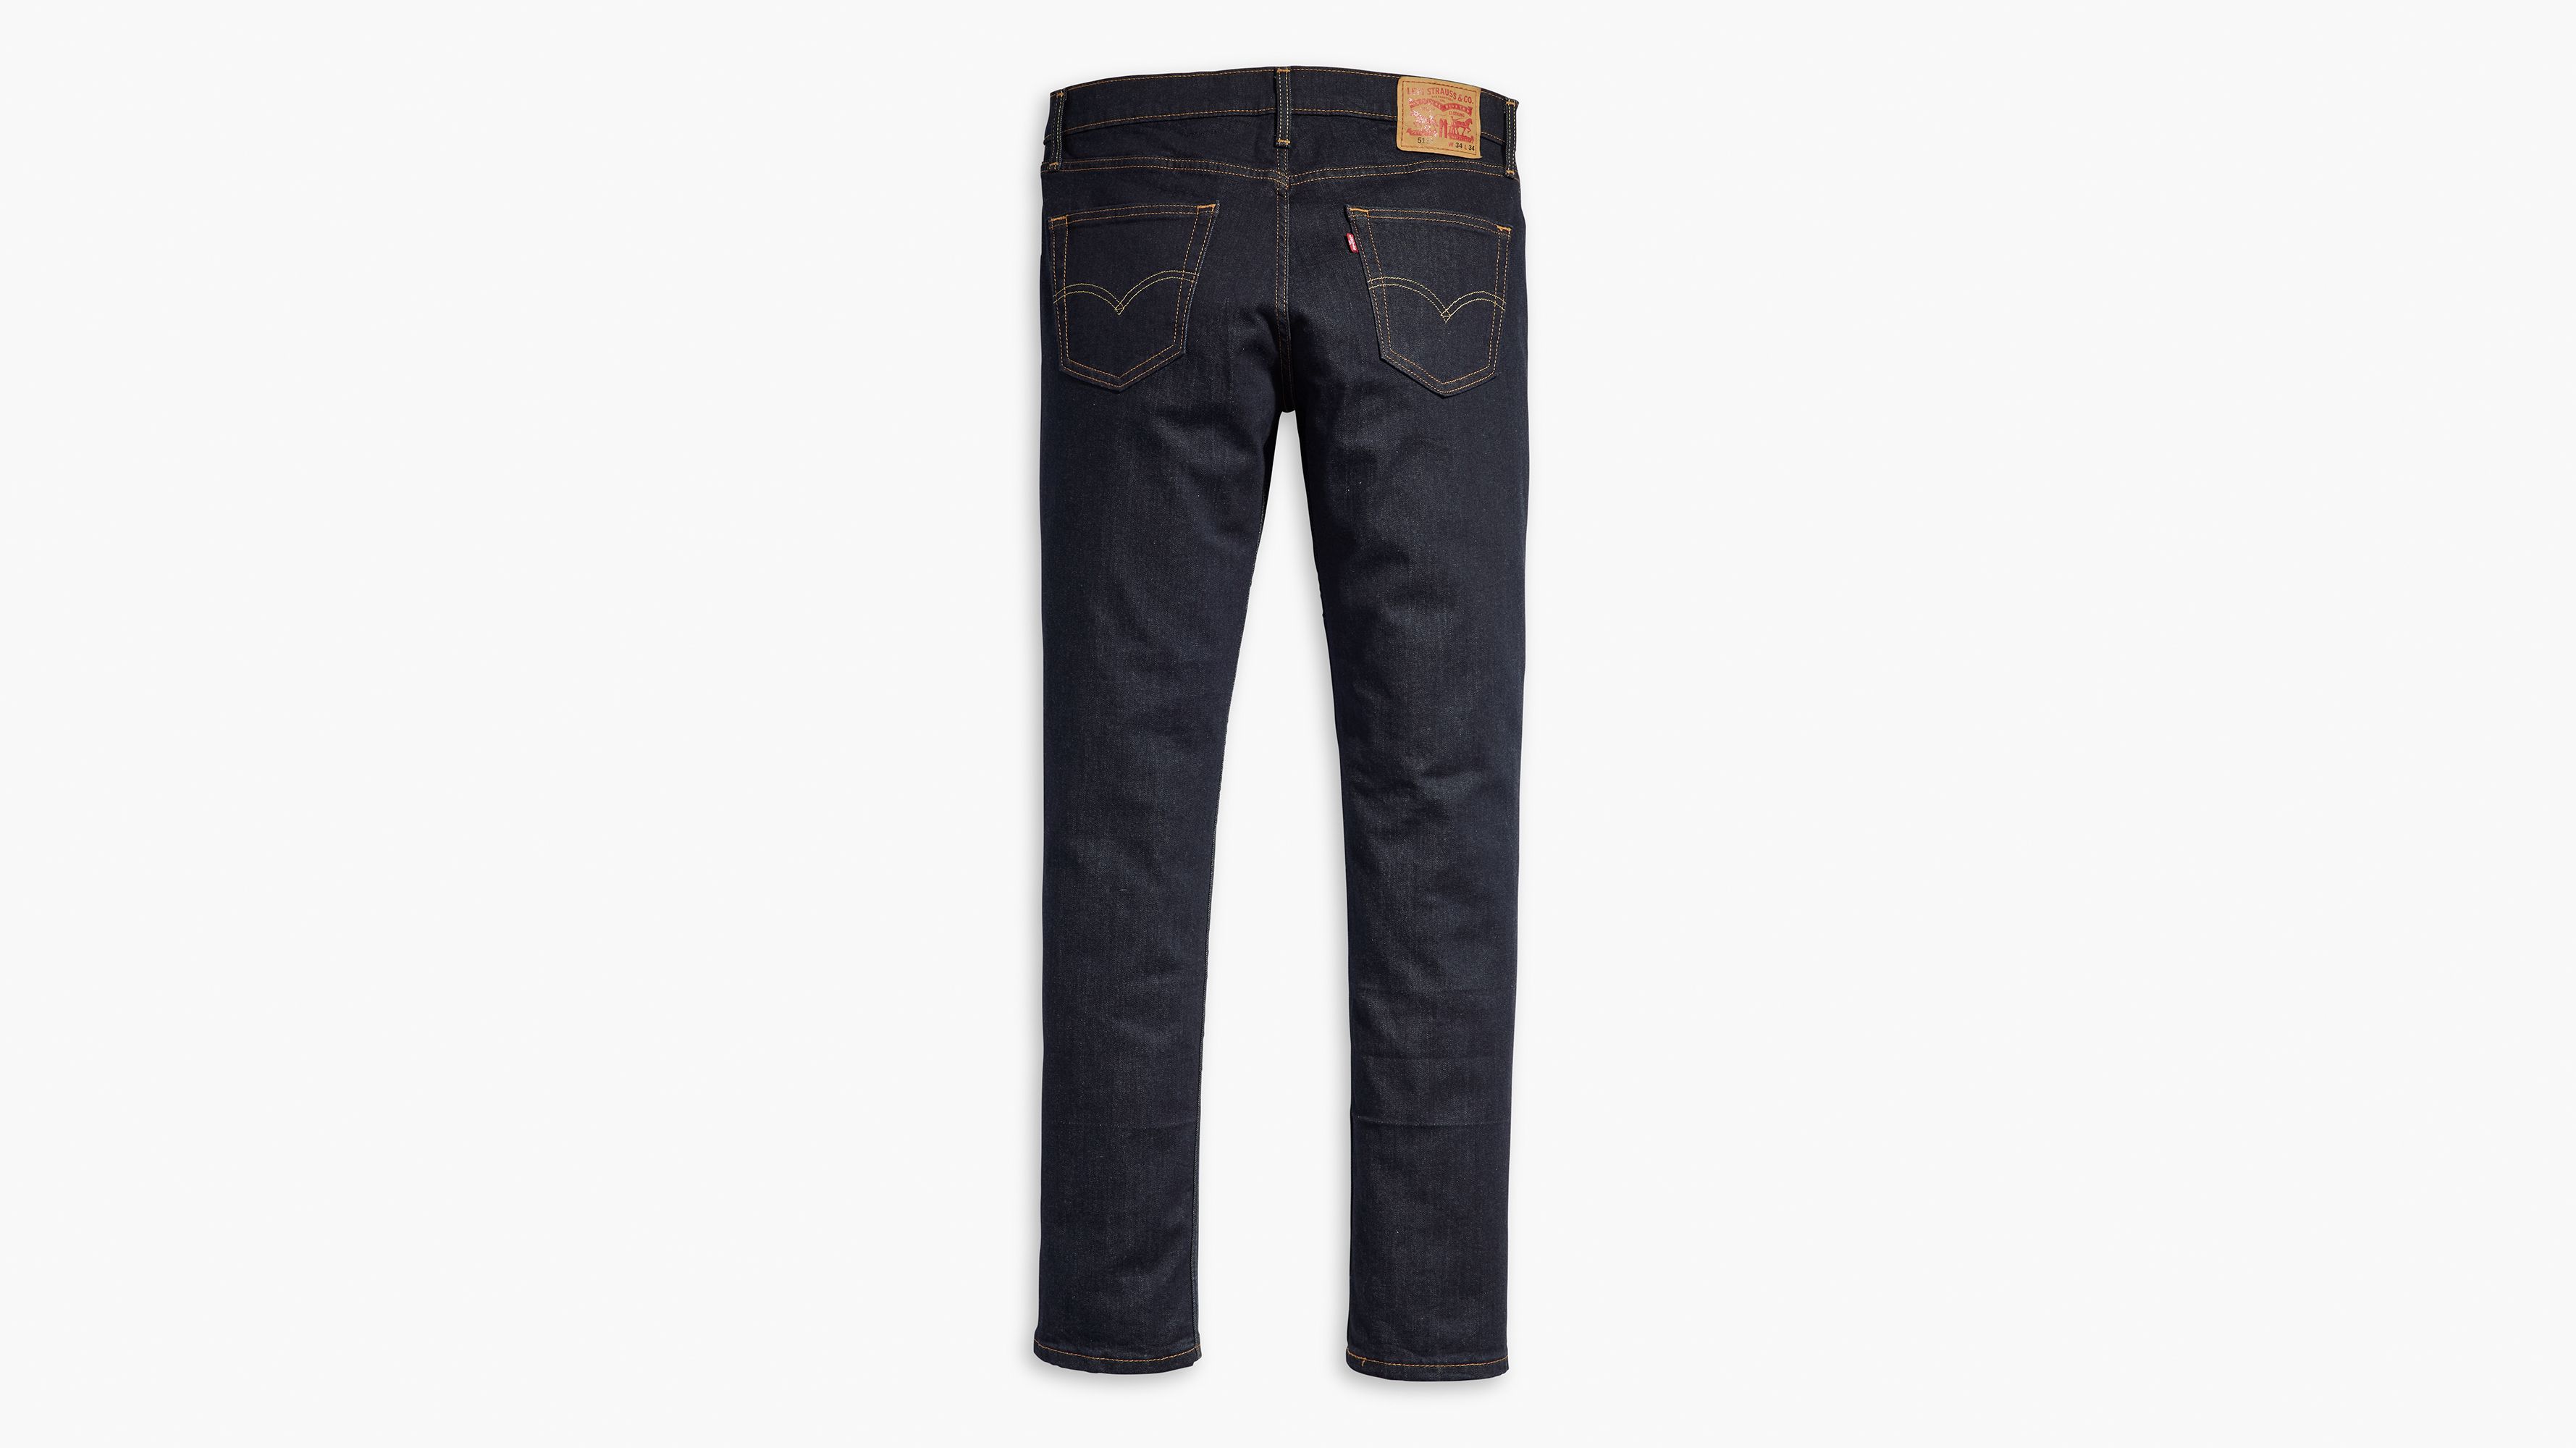 Jeans slim Levi's 511 lavado obscuro corte ajustado para niño